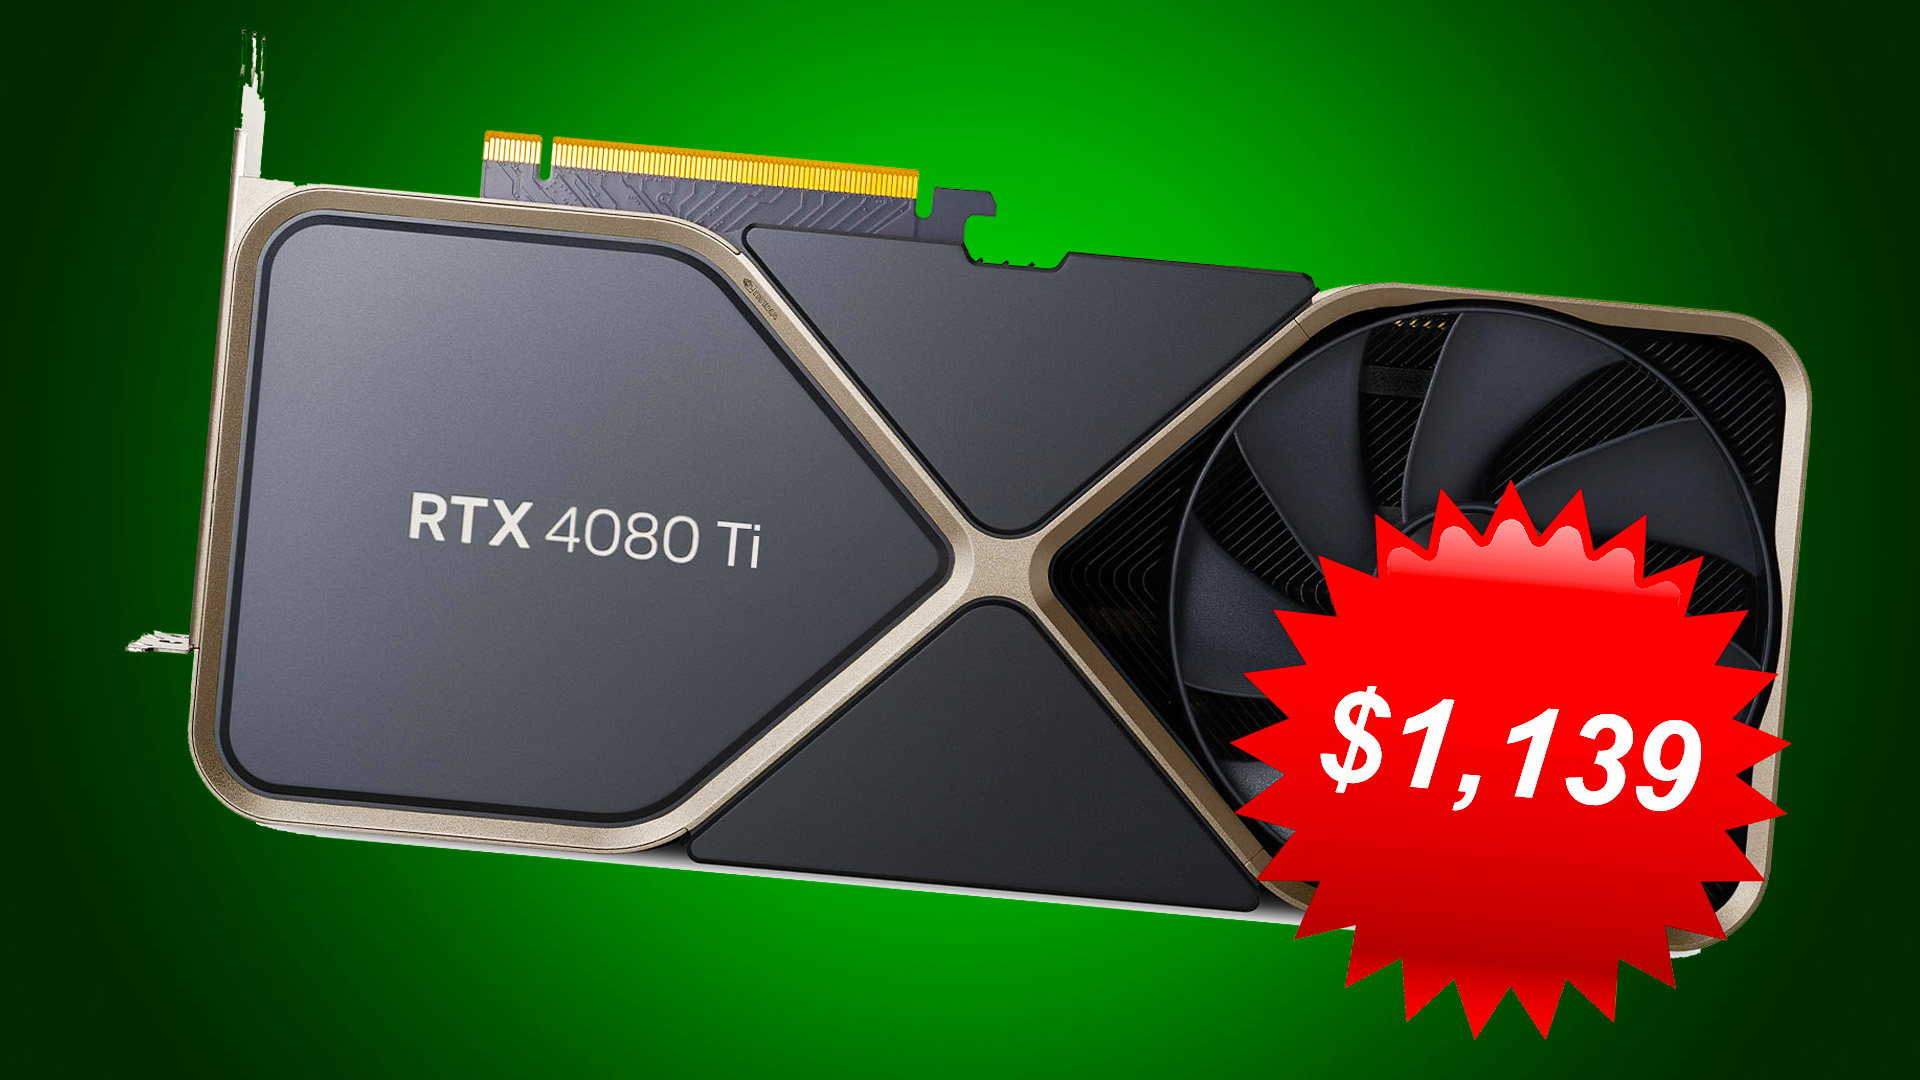 Imagine if the Nvidia GeForce RTX 4000 range wasn't a joke: RTX 4080 Ti with $1,139 price tag